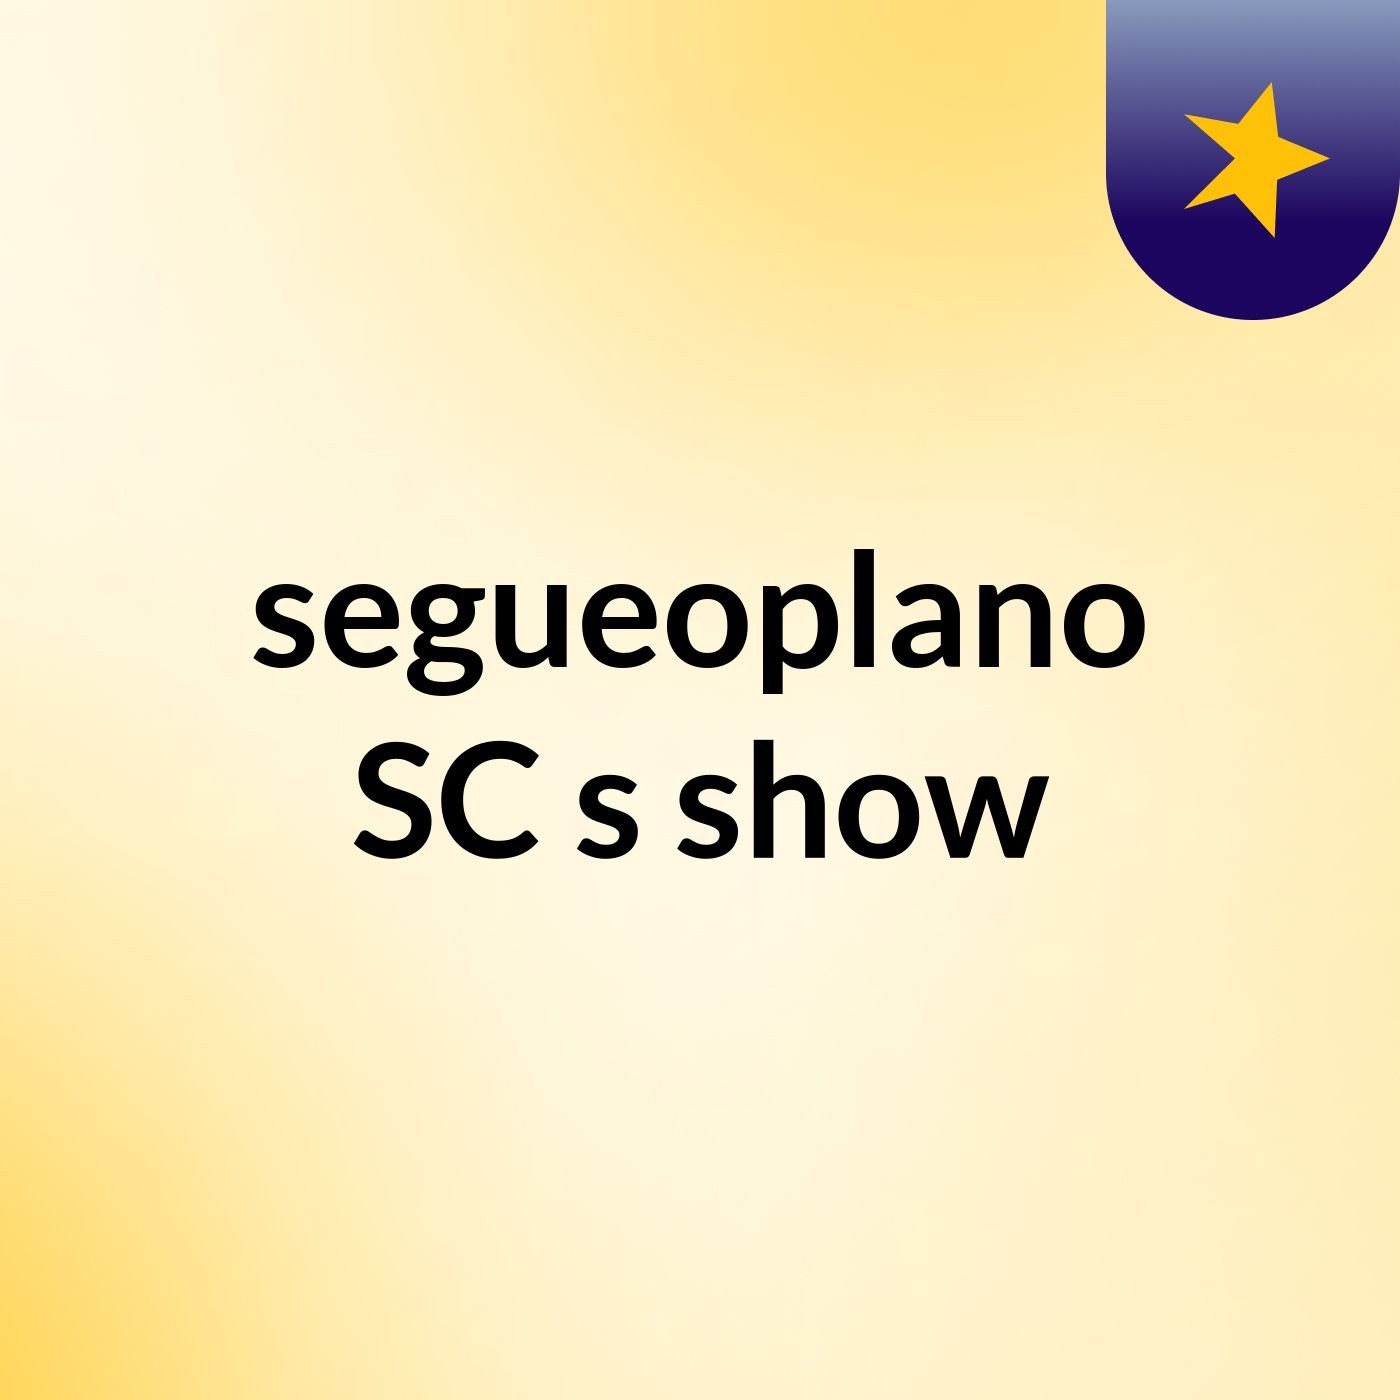 segueoplano SC's show